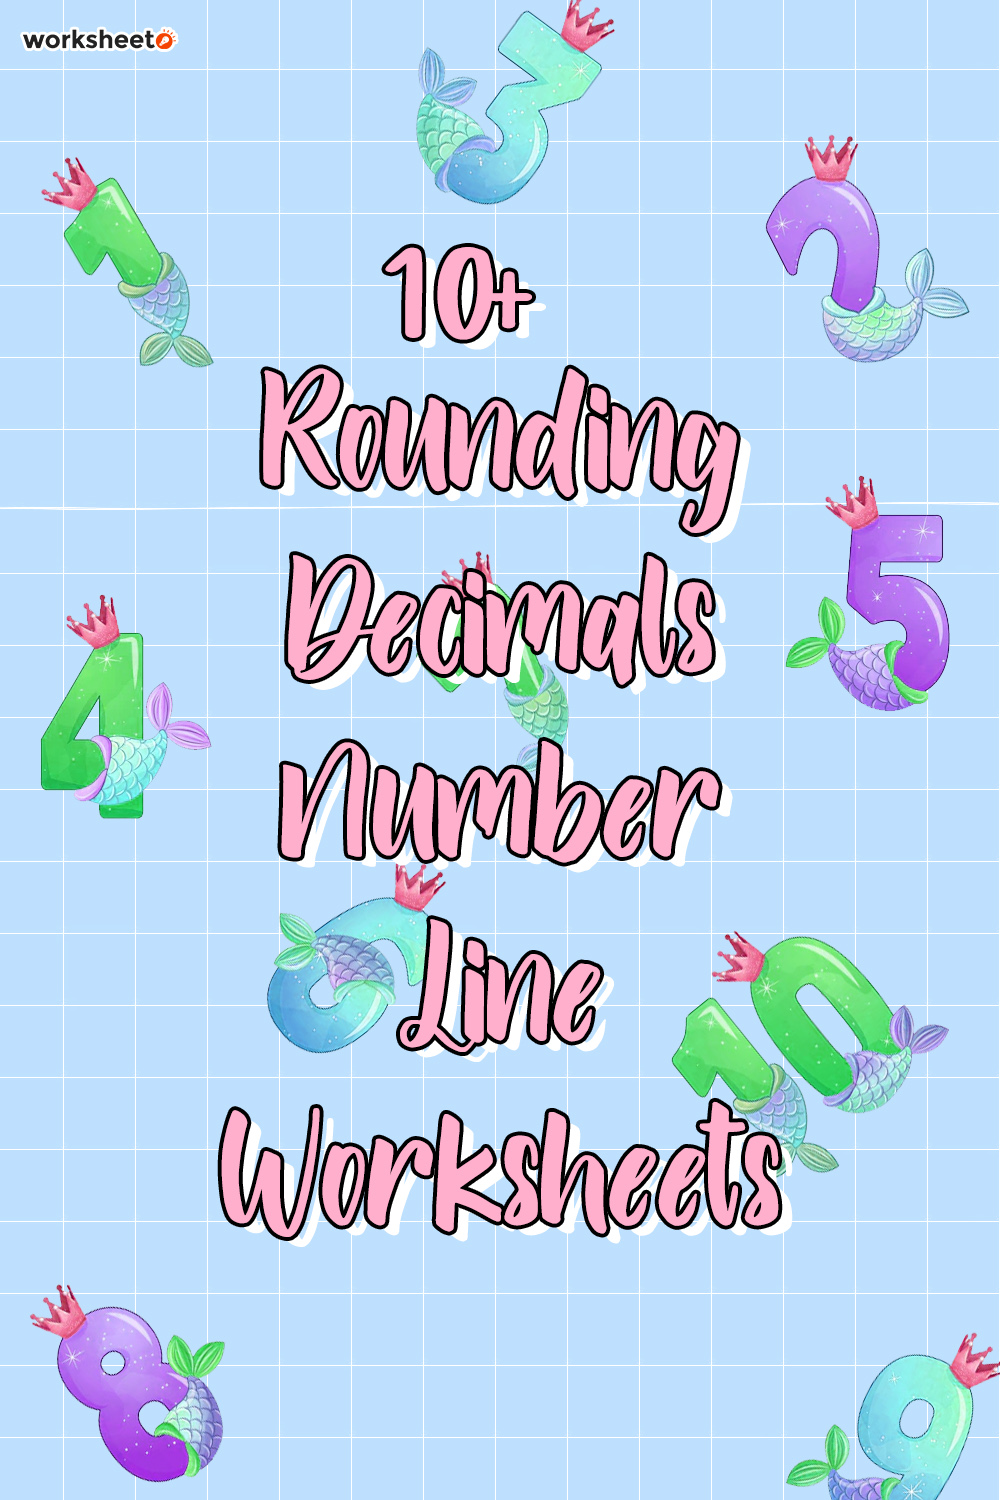 11 Rounding Decimals Number Line Worksheet Free PDF At Worksheeto